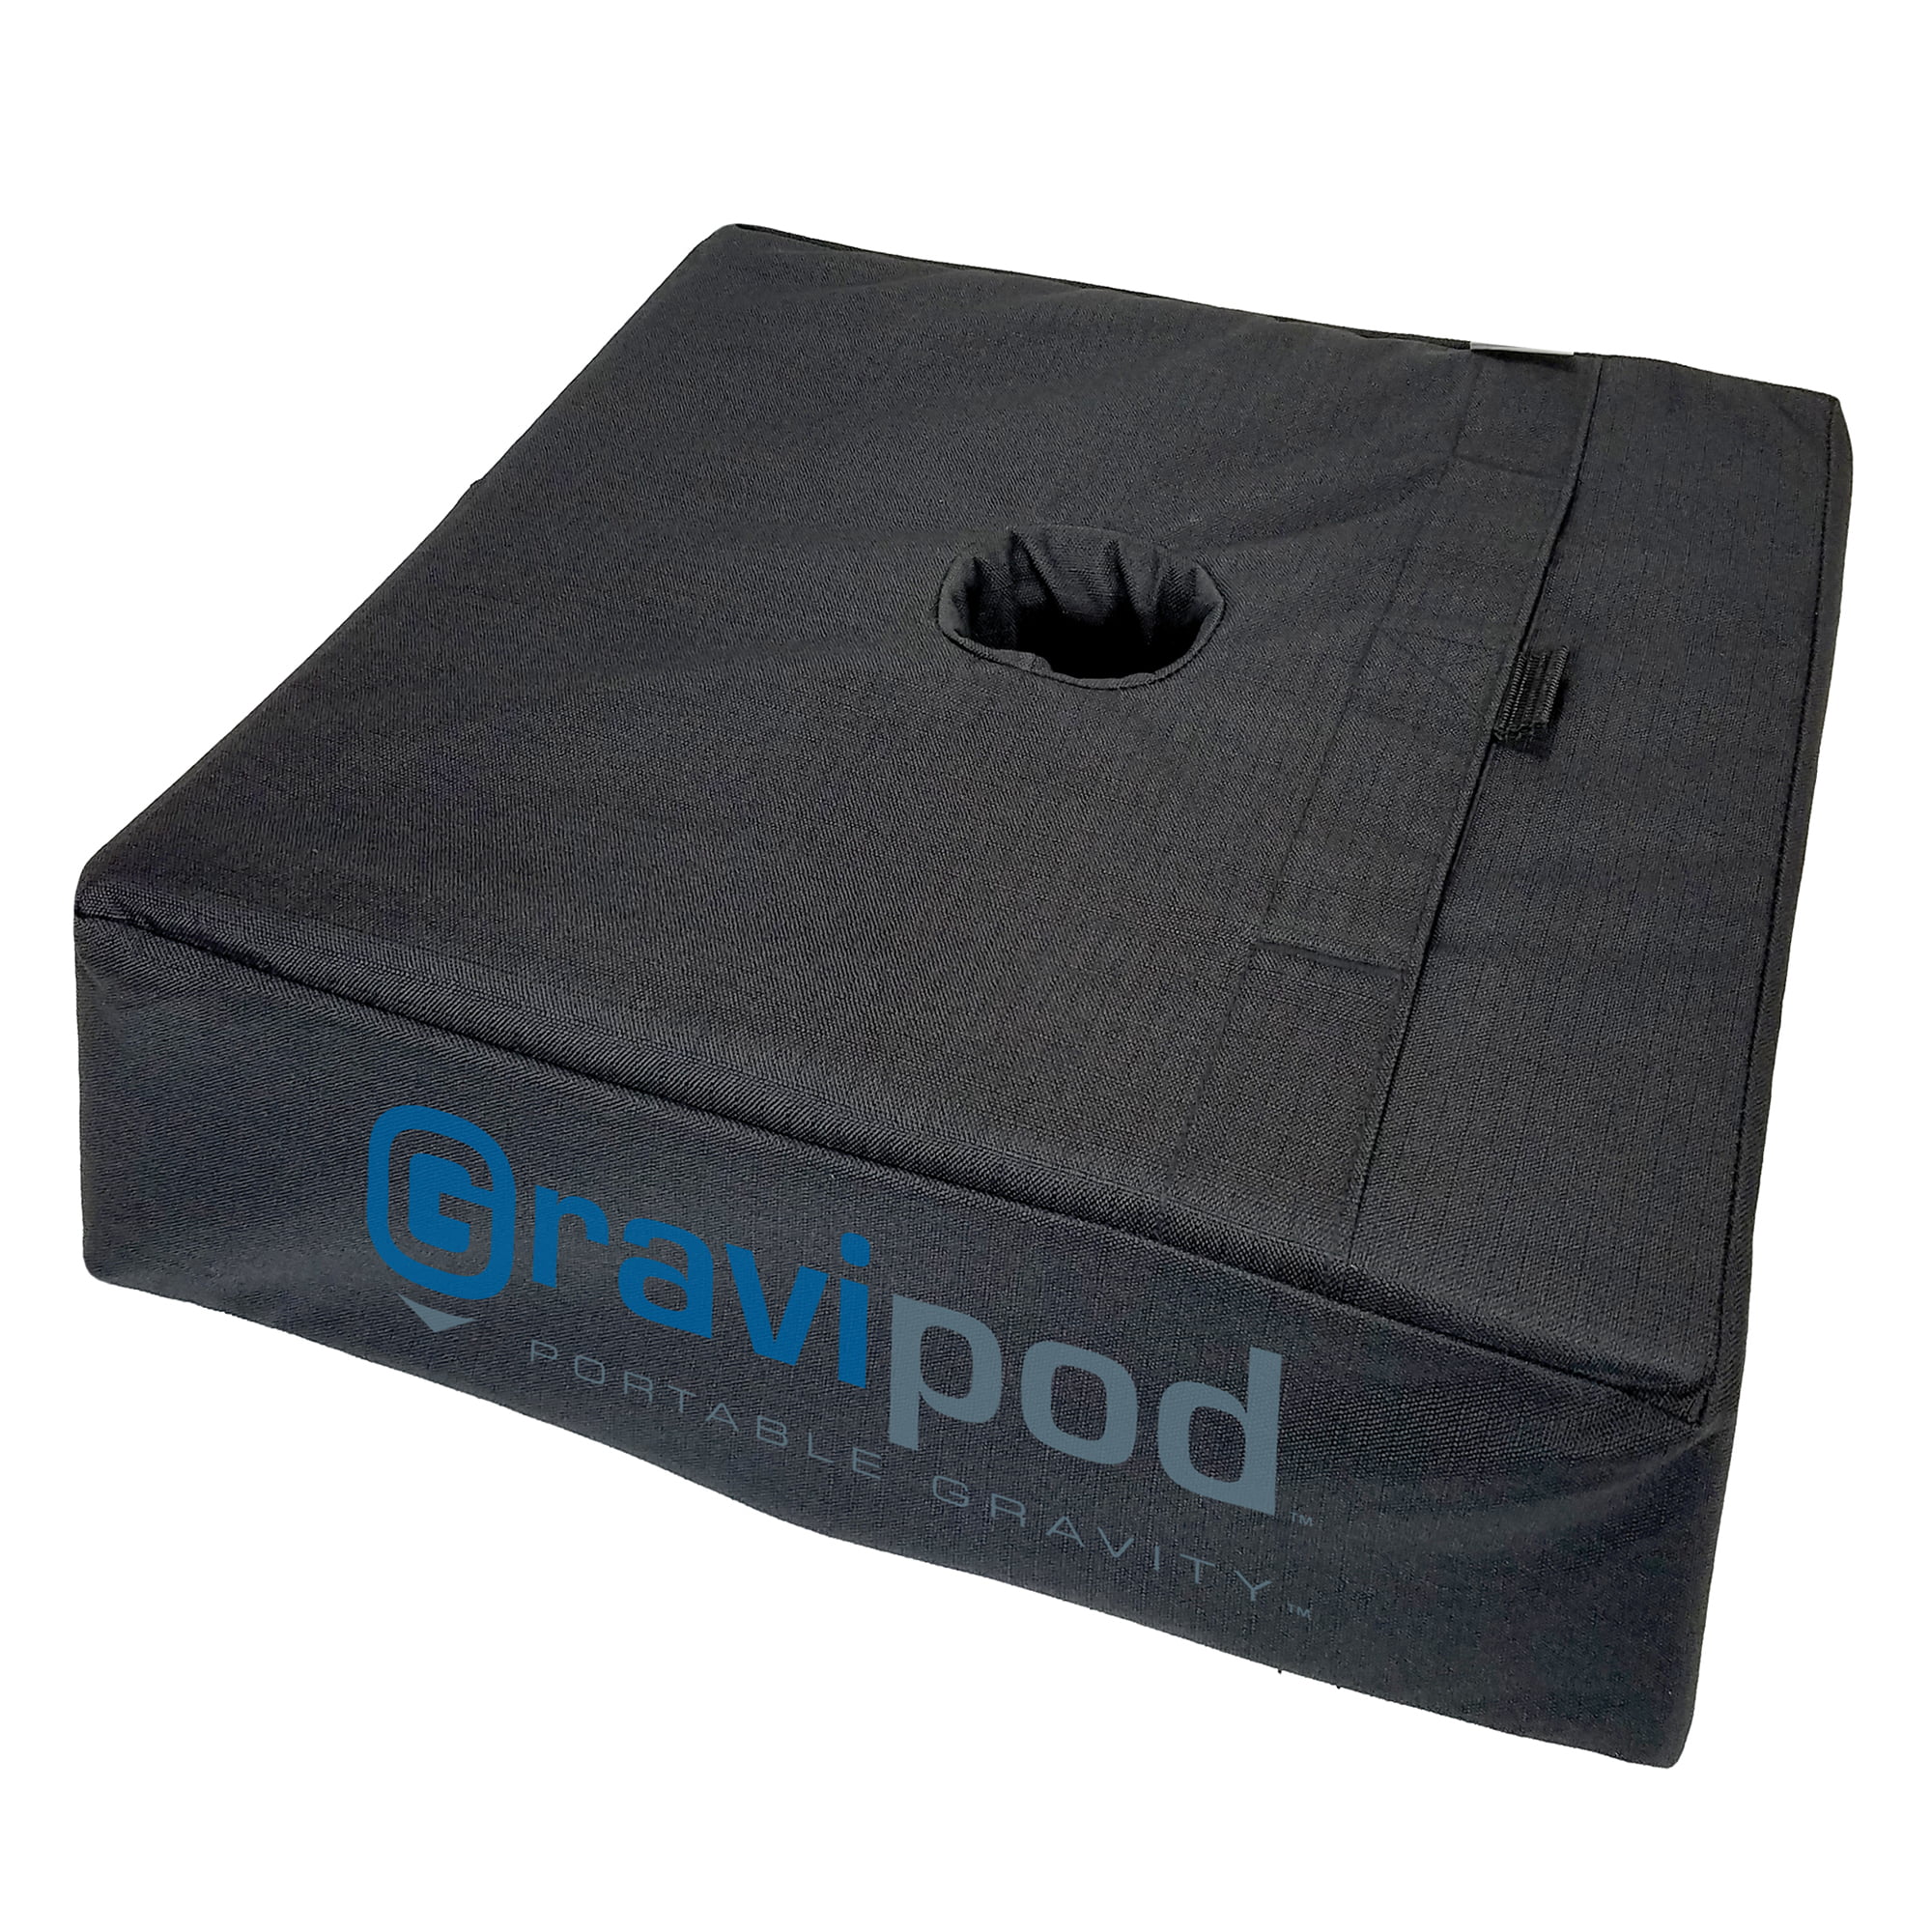 Gravipod 18" Square Umbrella Base Weight Bag Up to 110 lbs FF55 